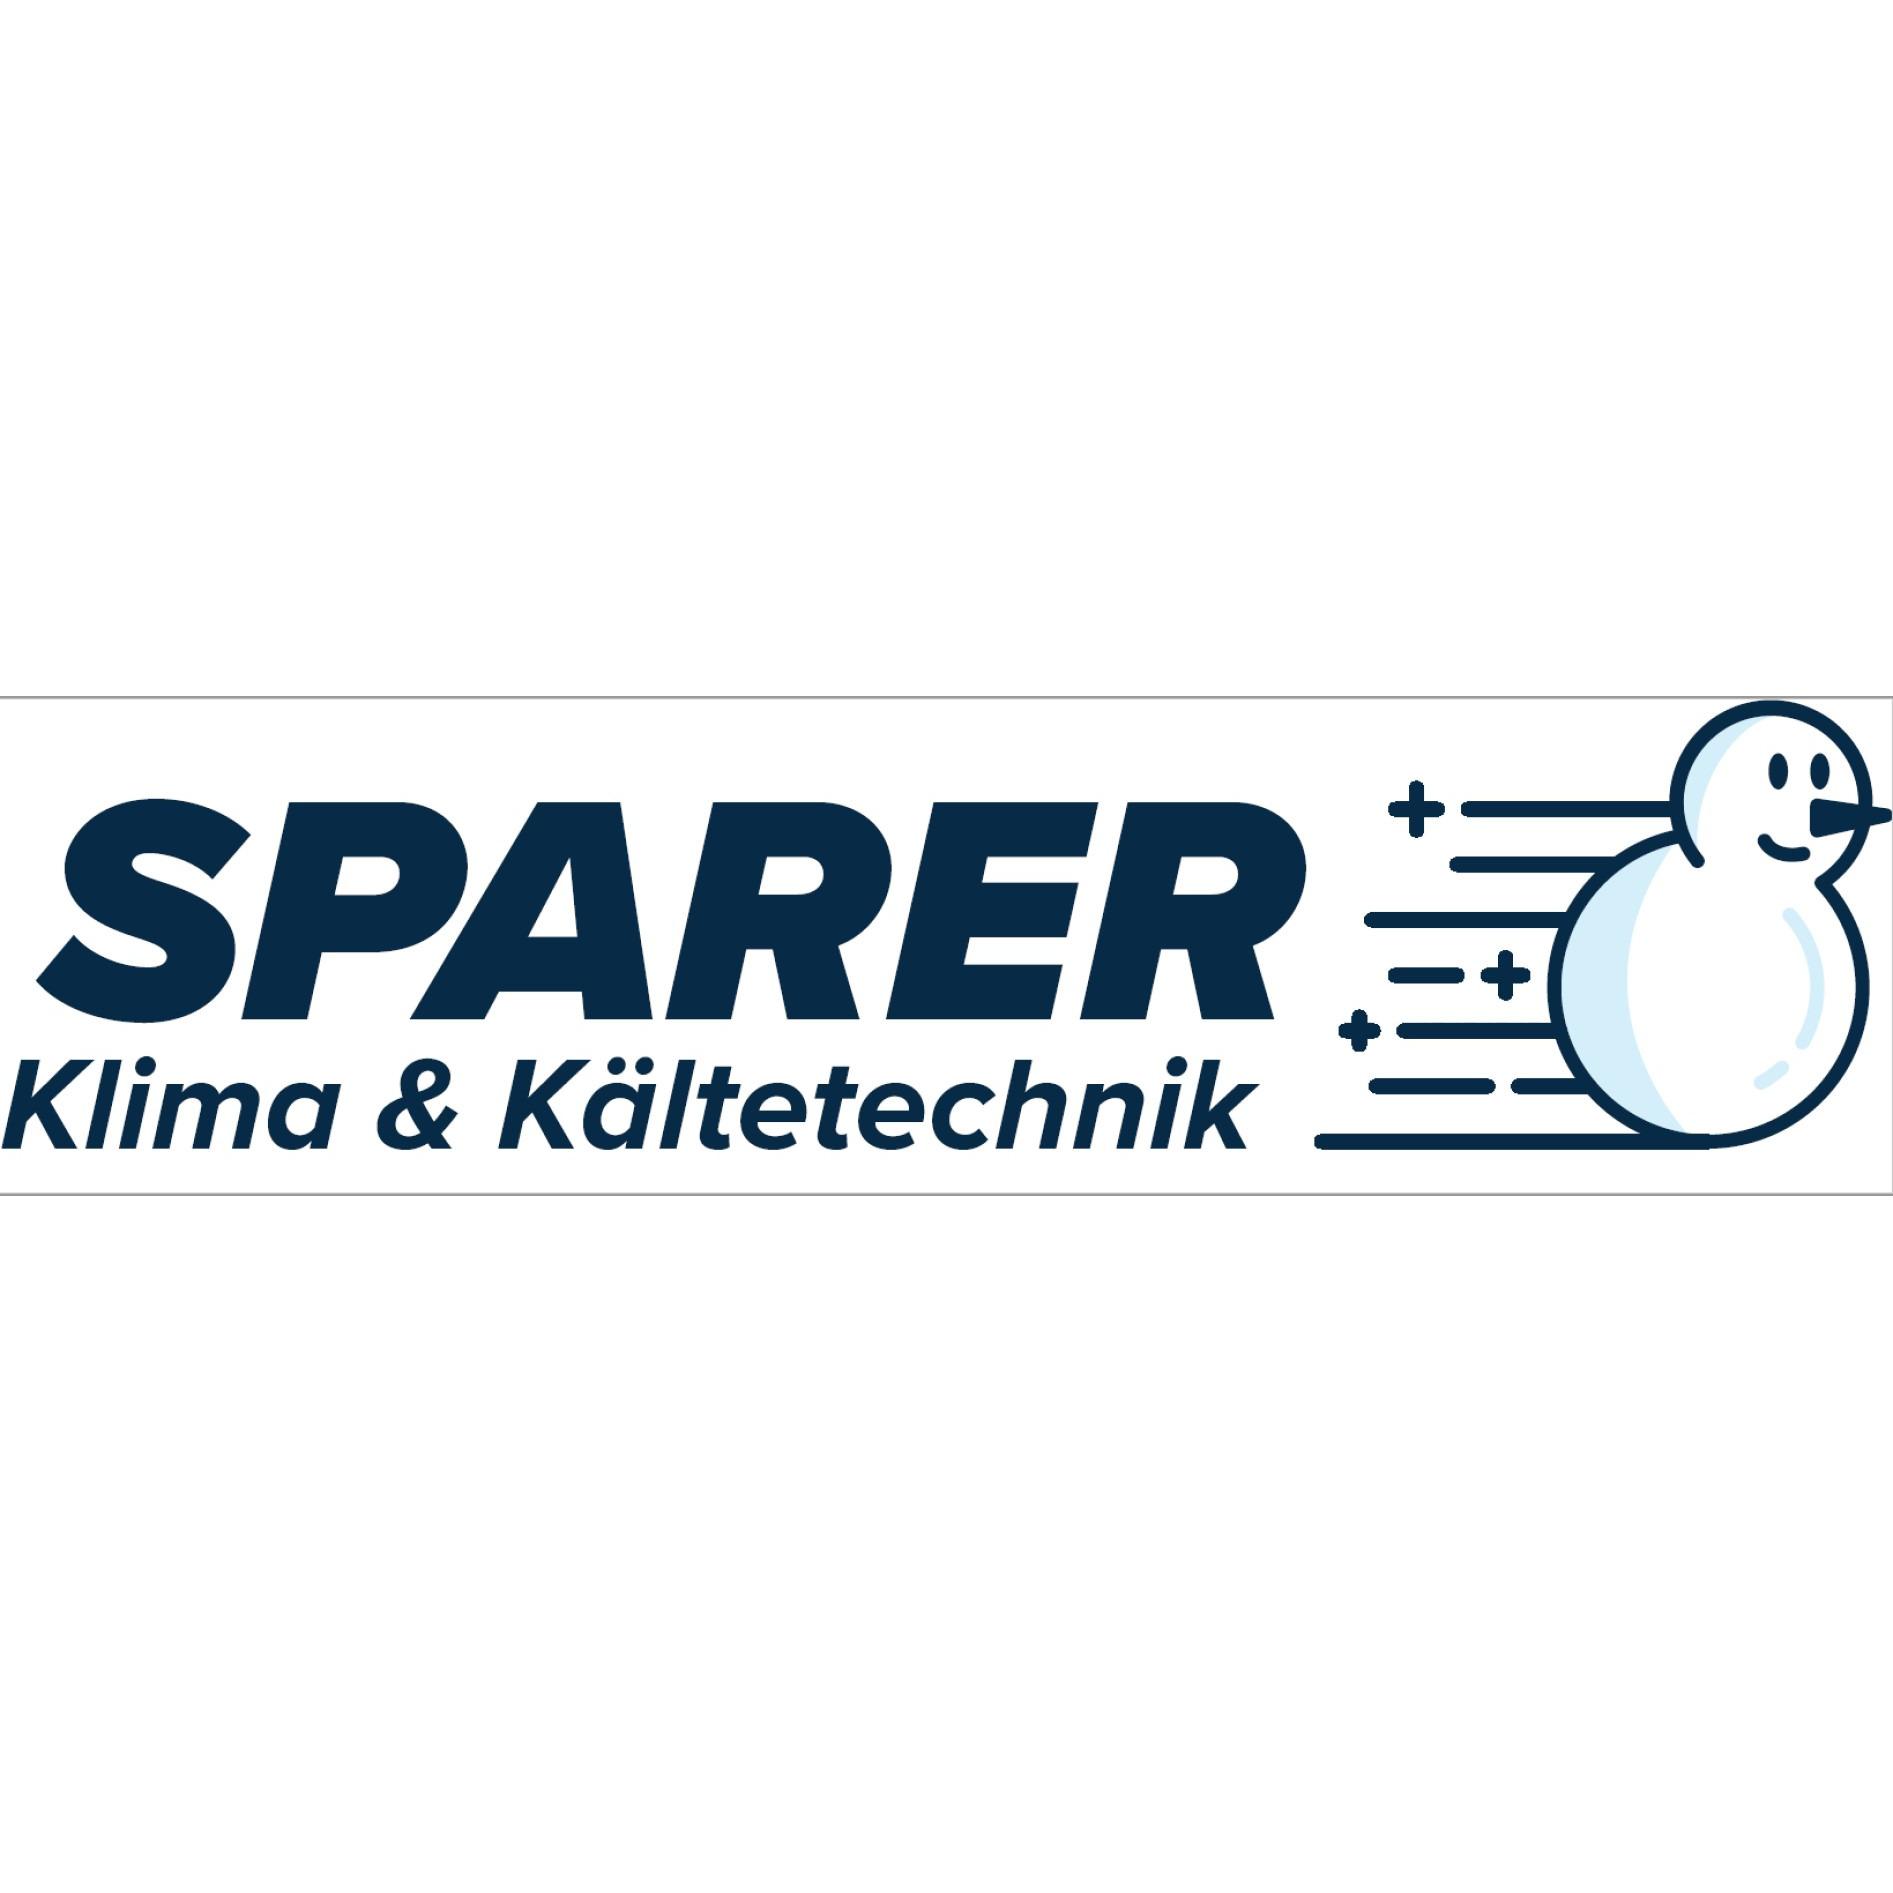 Edmund Sparer Klima & Kältetechnik GmbH Logo